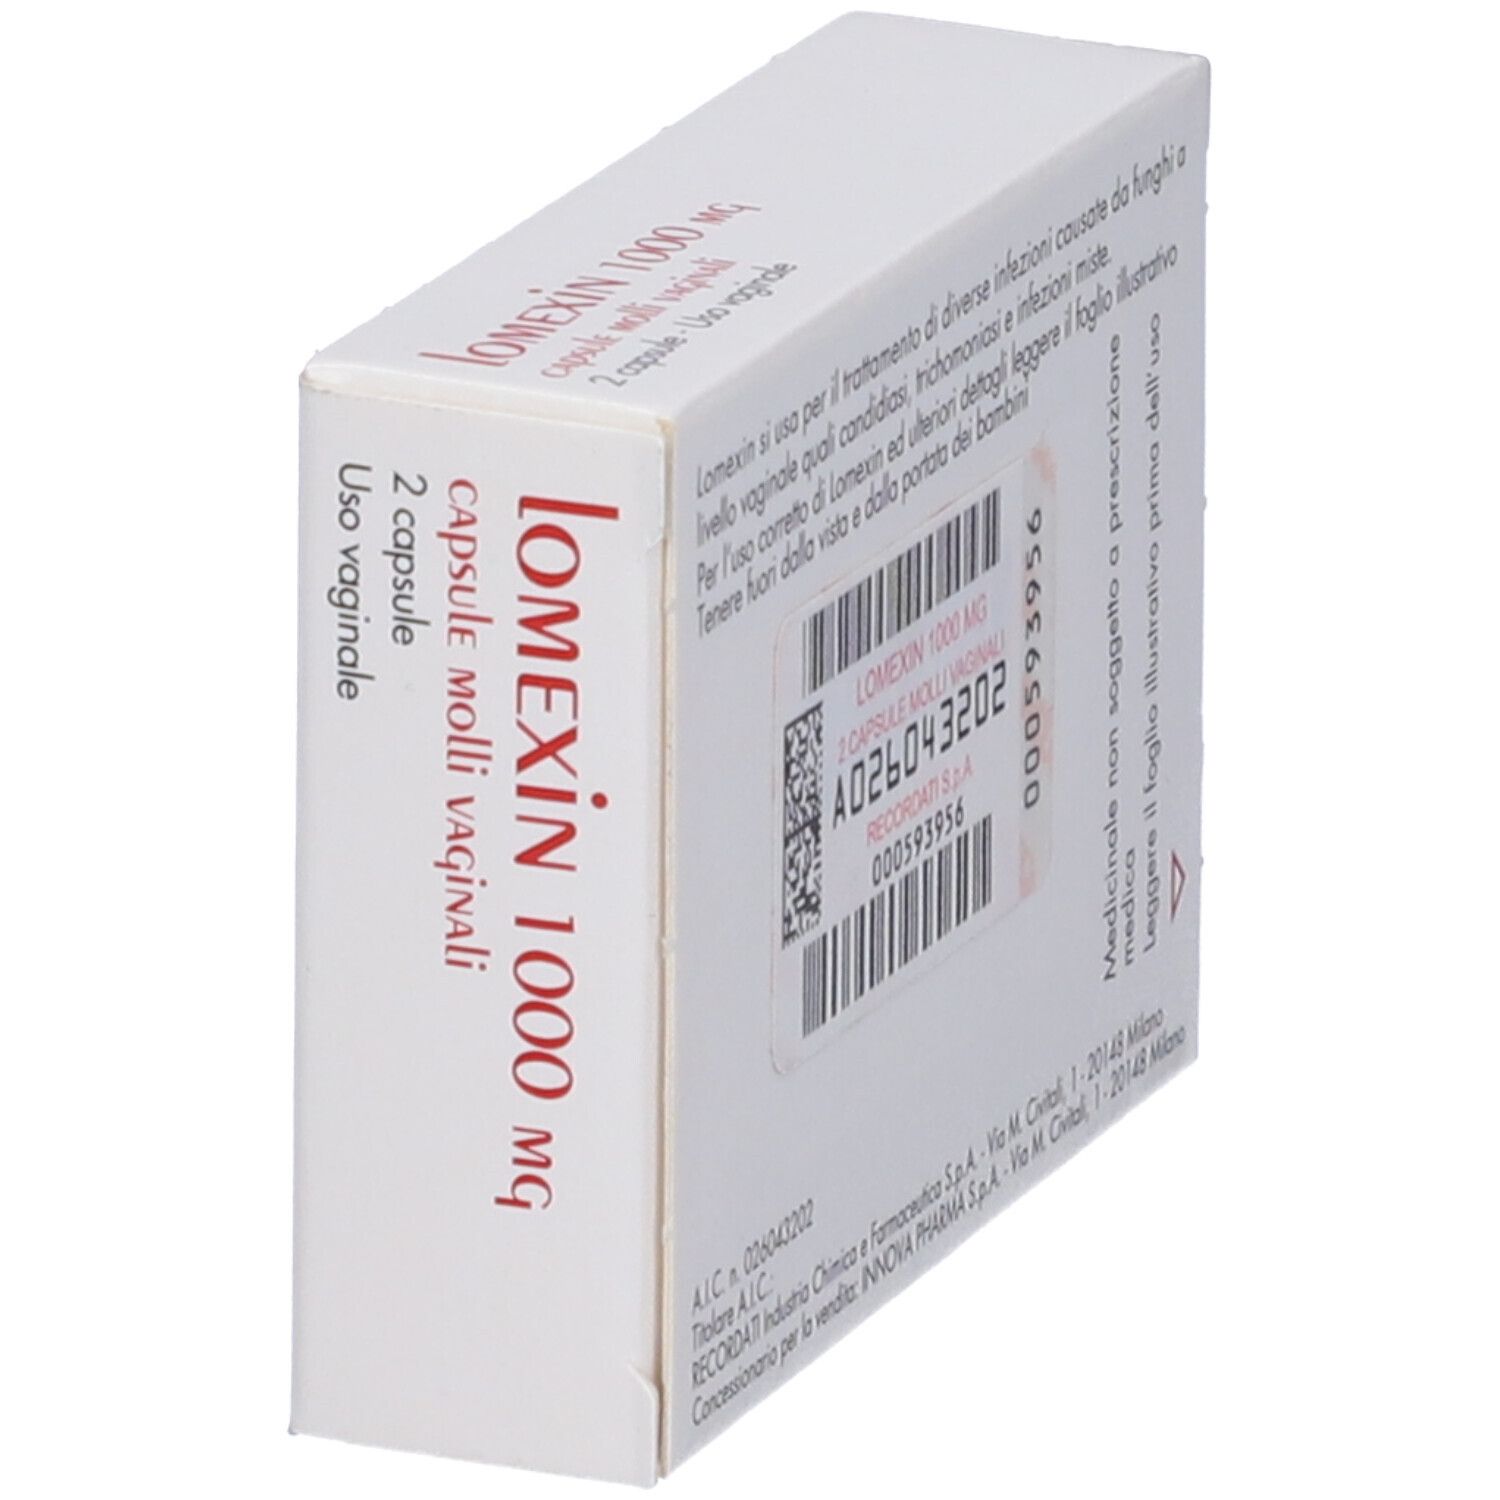 Lomexin 1000 mg capsule molli vaginali